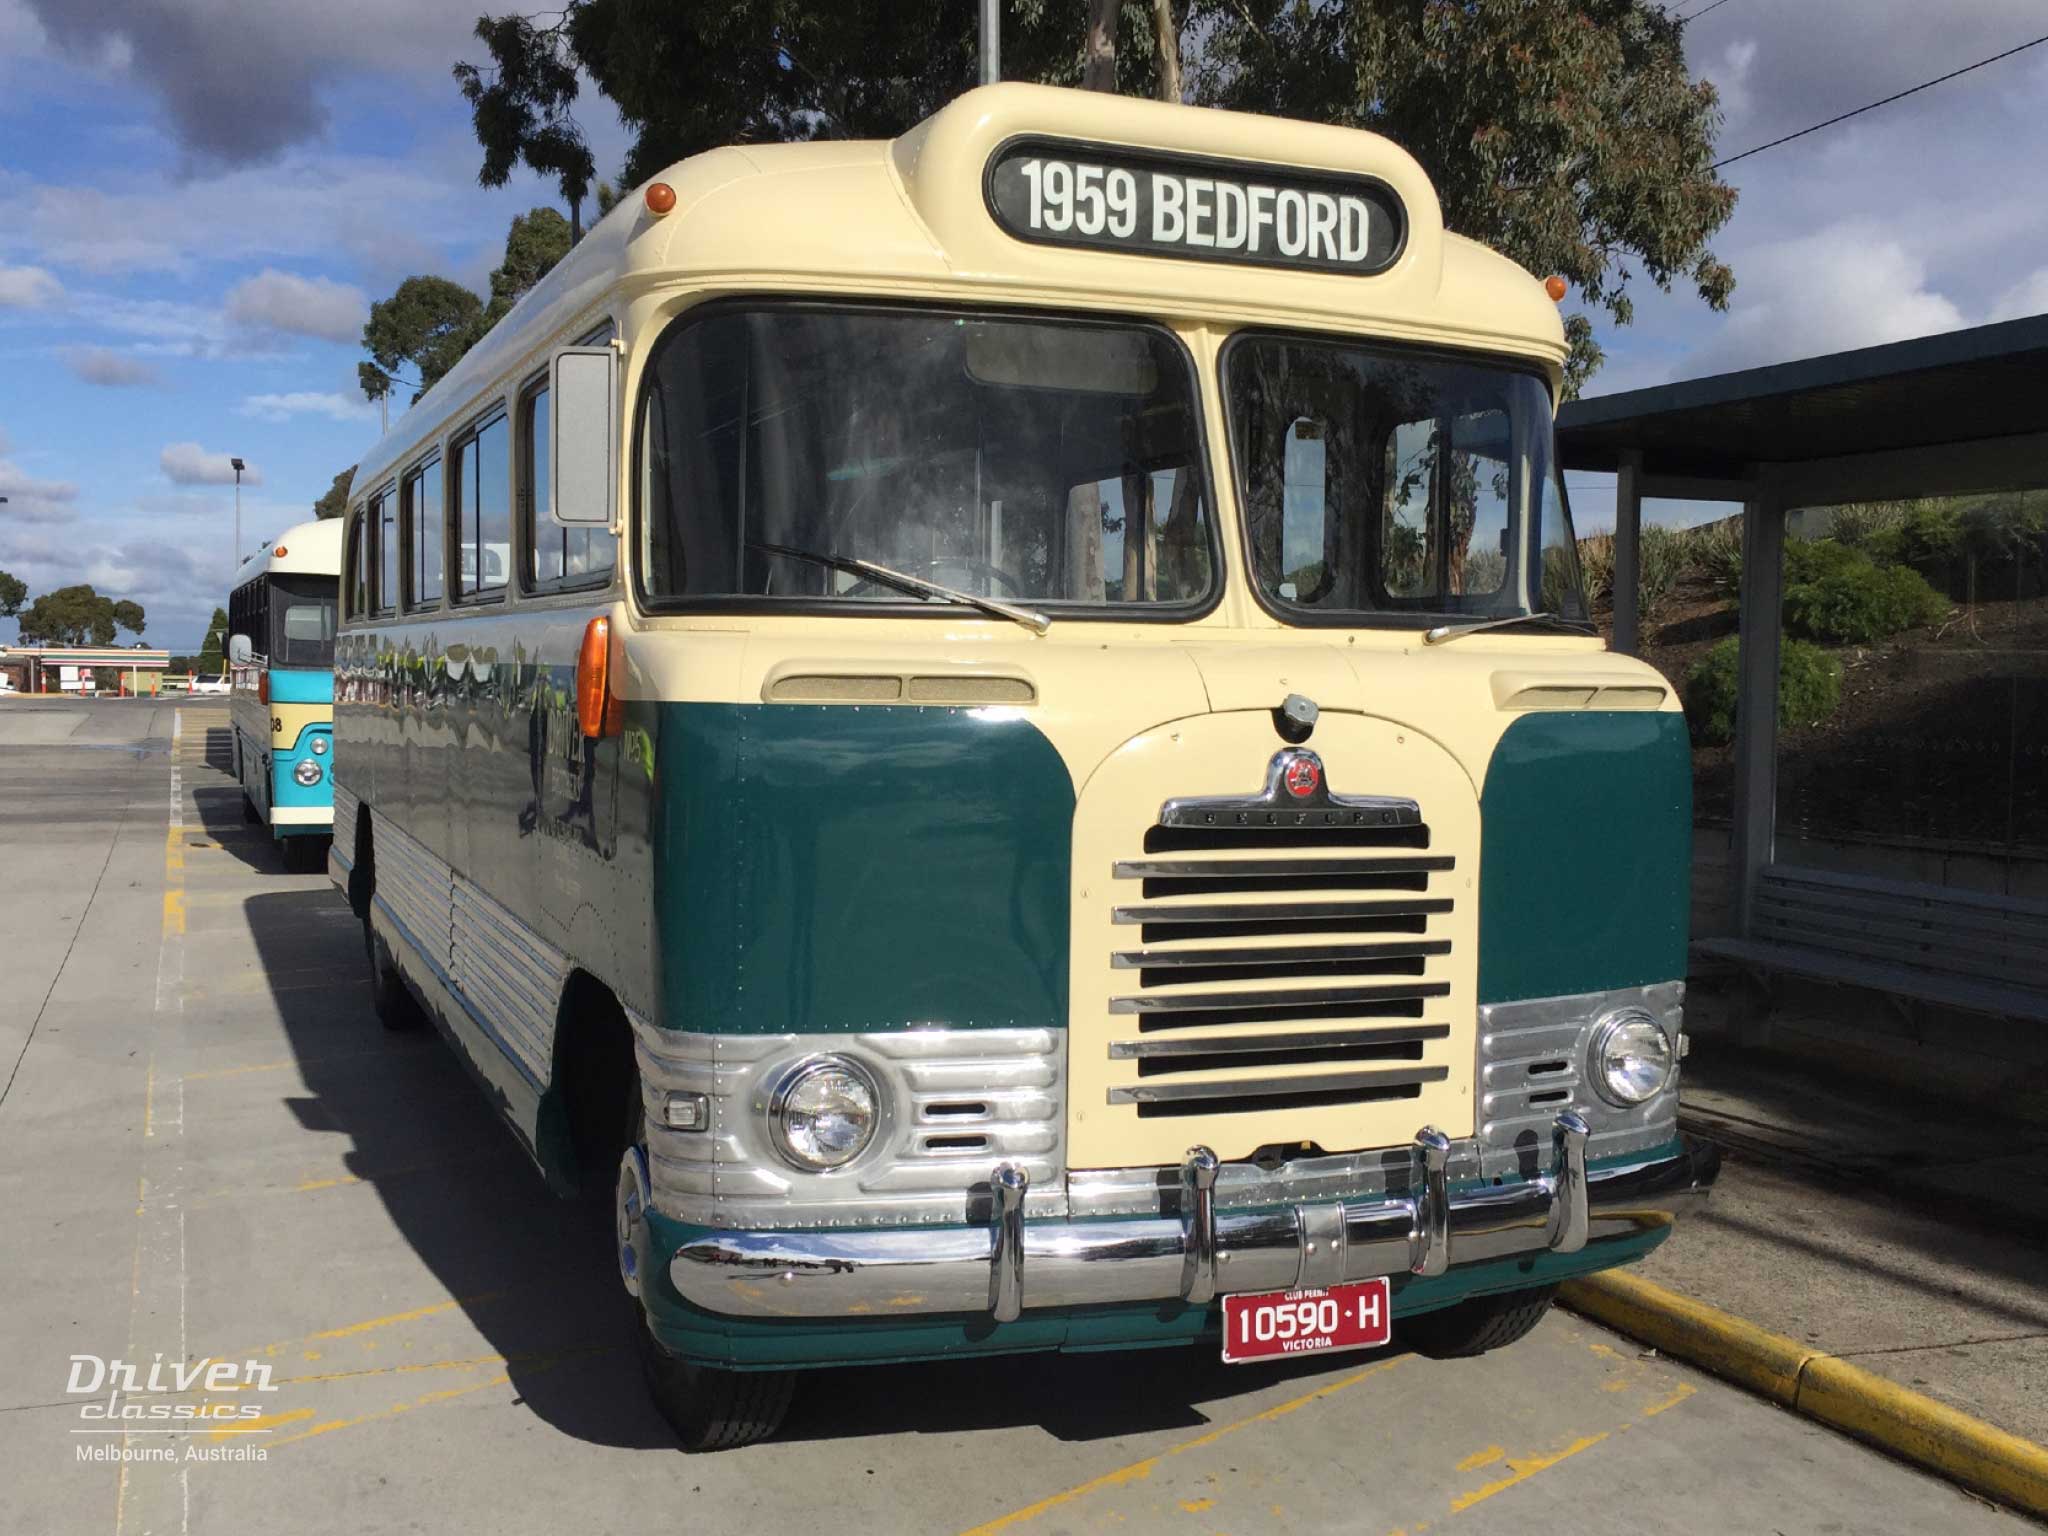 Bedford SB3 Bus (1959 model), Waverley Gardens